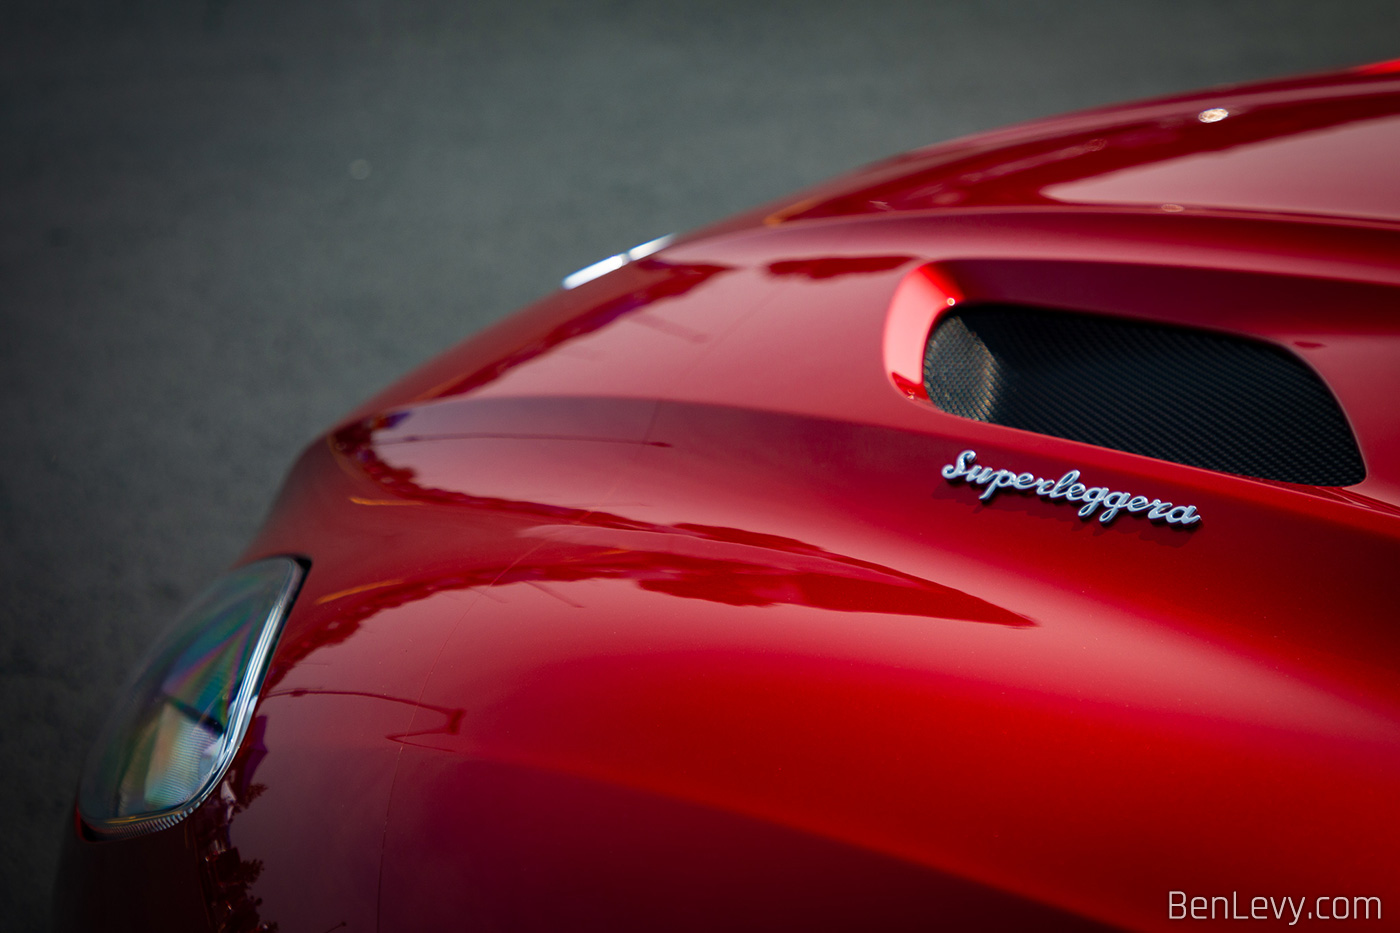 Superleggera decal on Red Aston Martin DBS